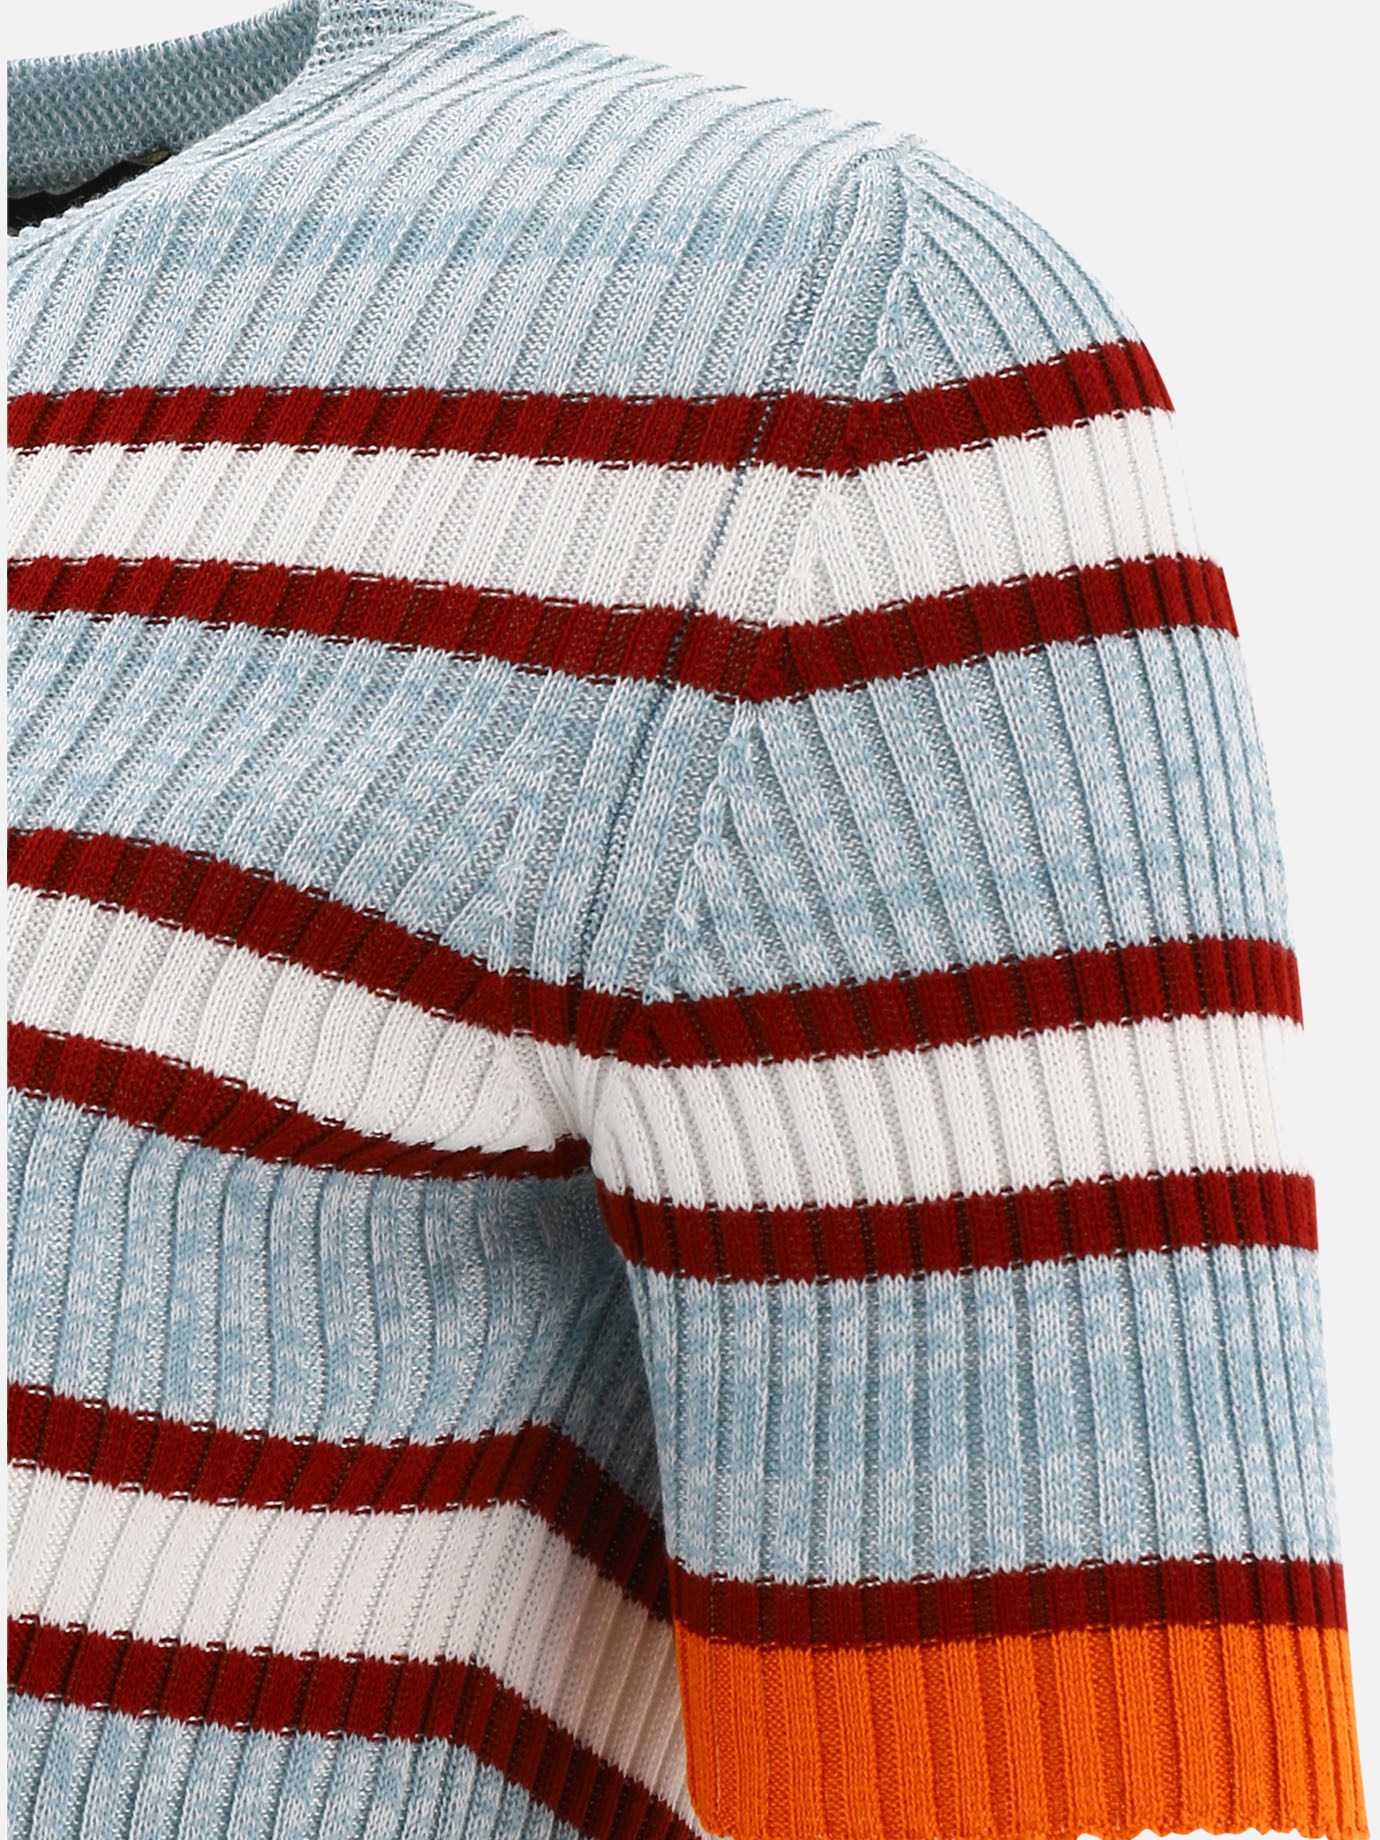 Striped sweater by Roberto Collina